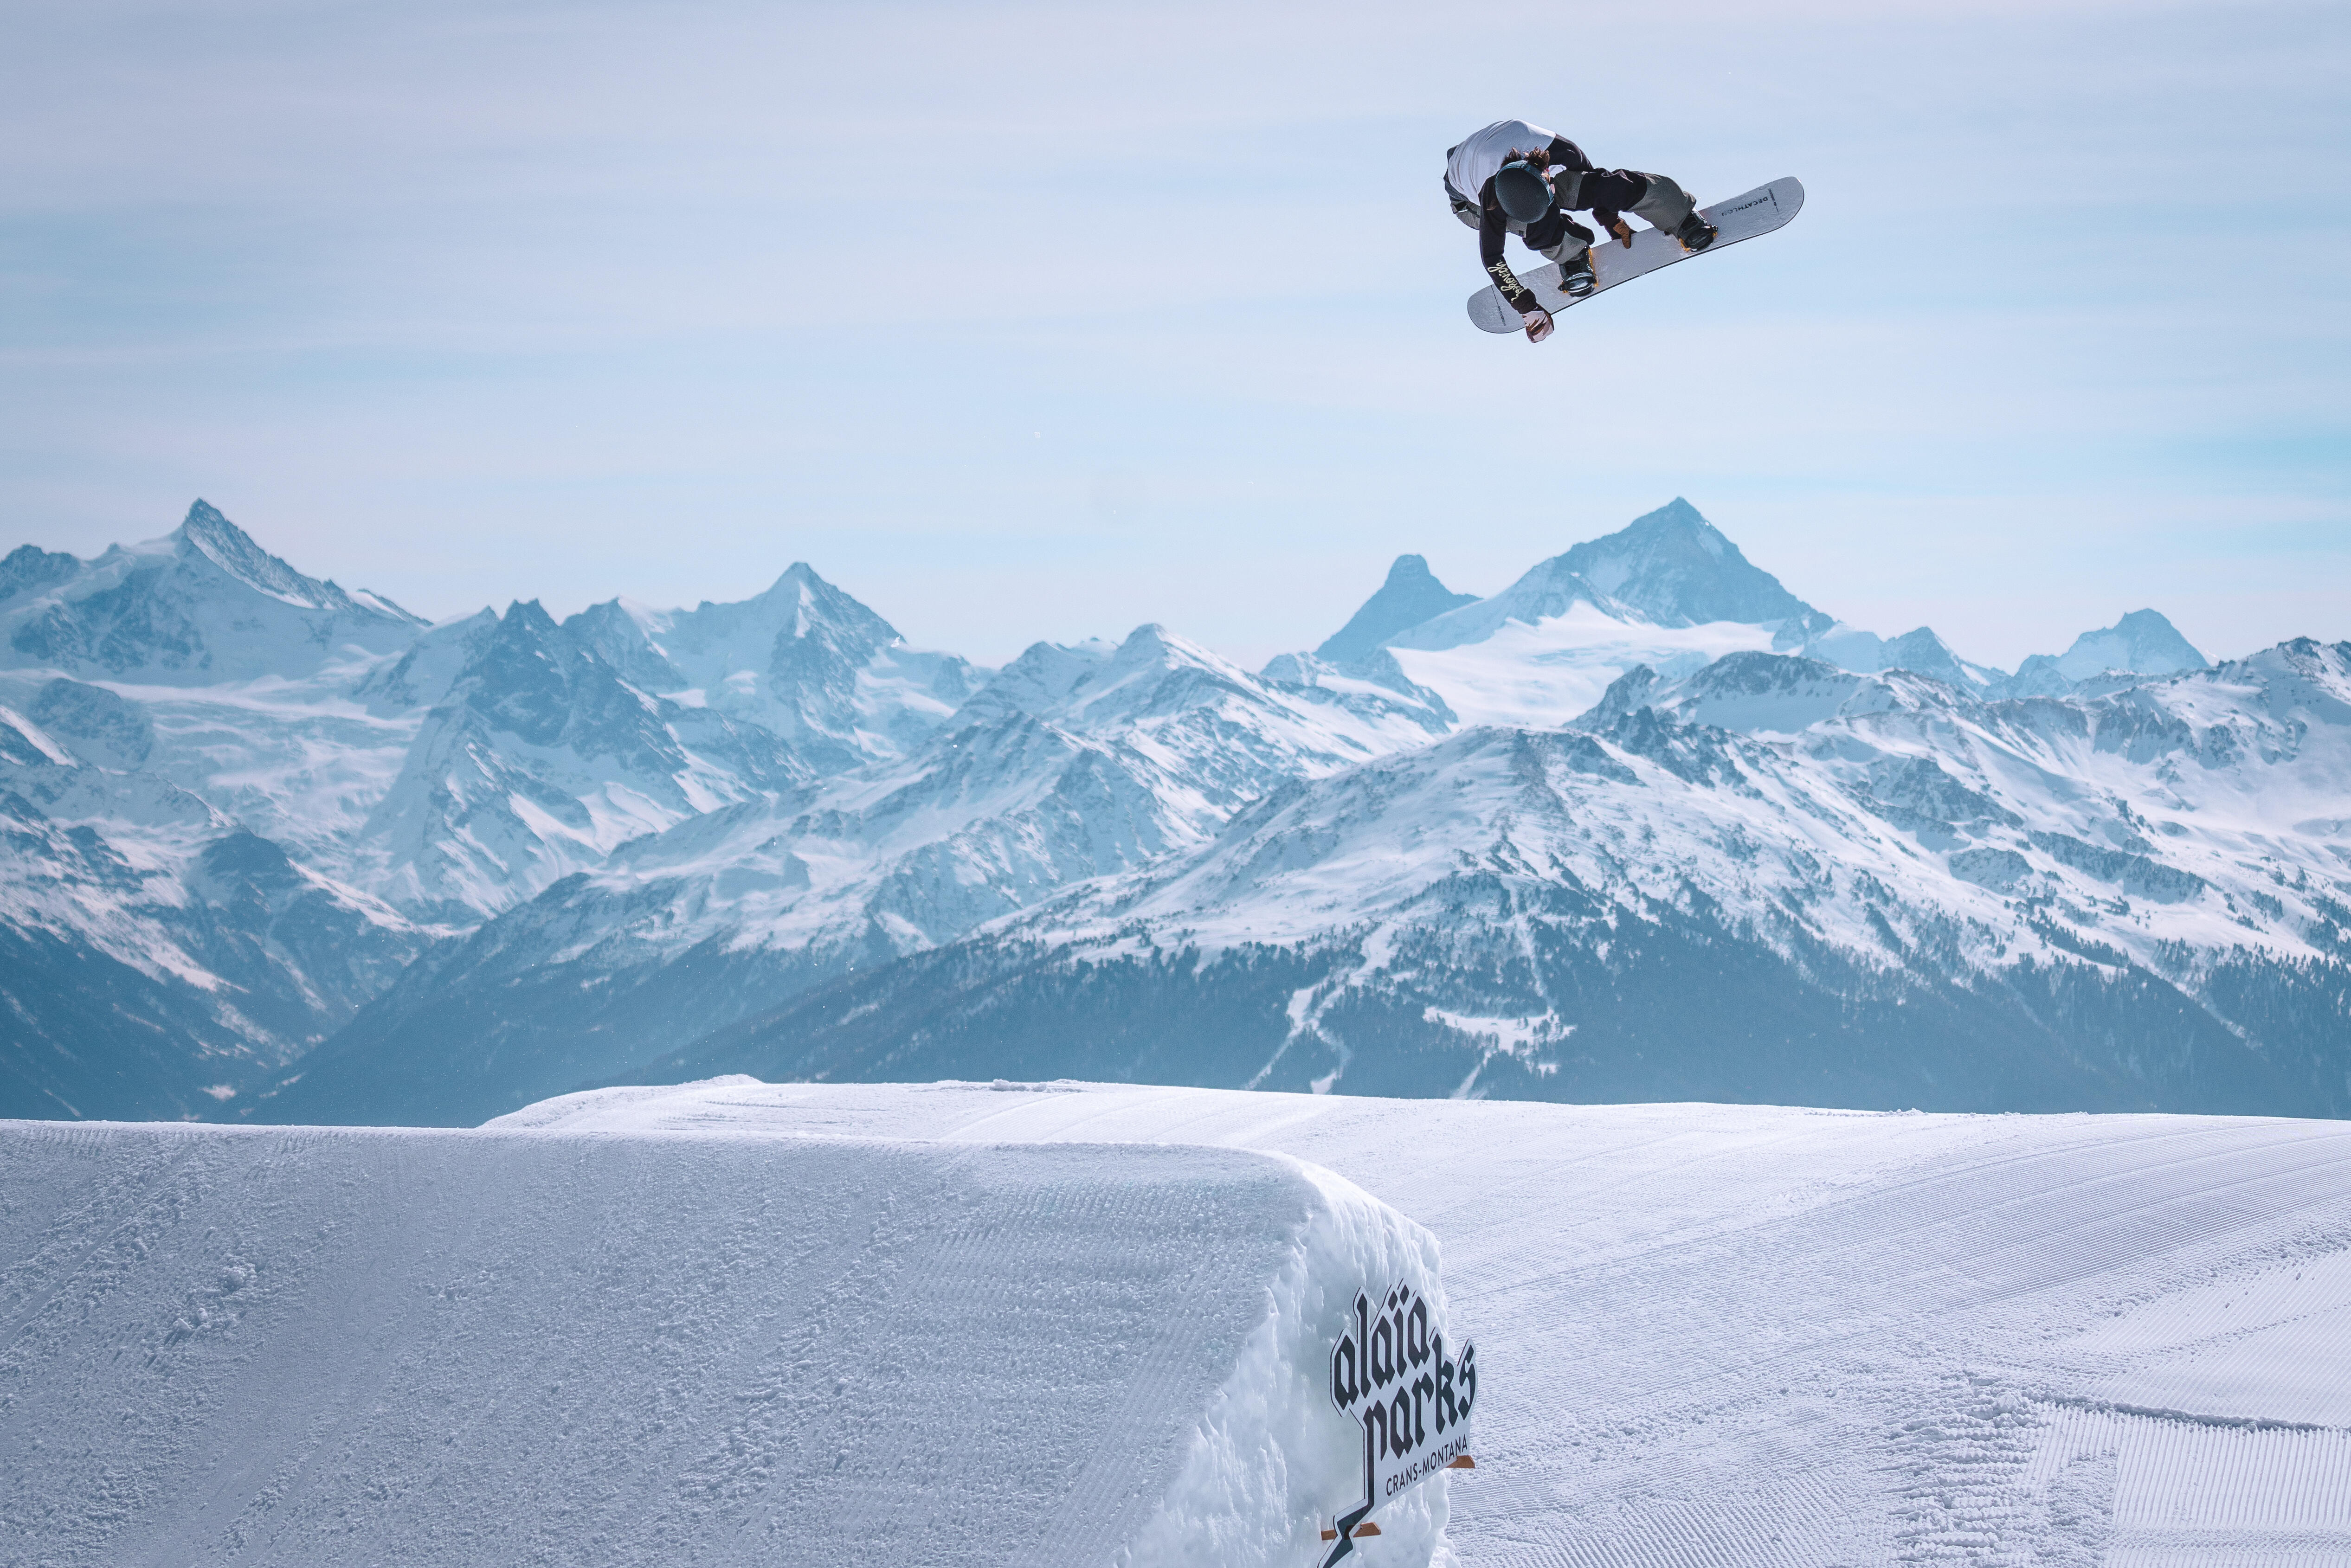 Kids' Snowboard Bib Pants - 500 Black - Carbon grey, Black - Dreamscape -  Decathlon